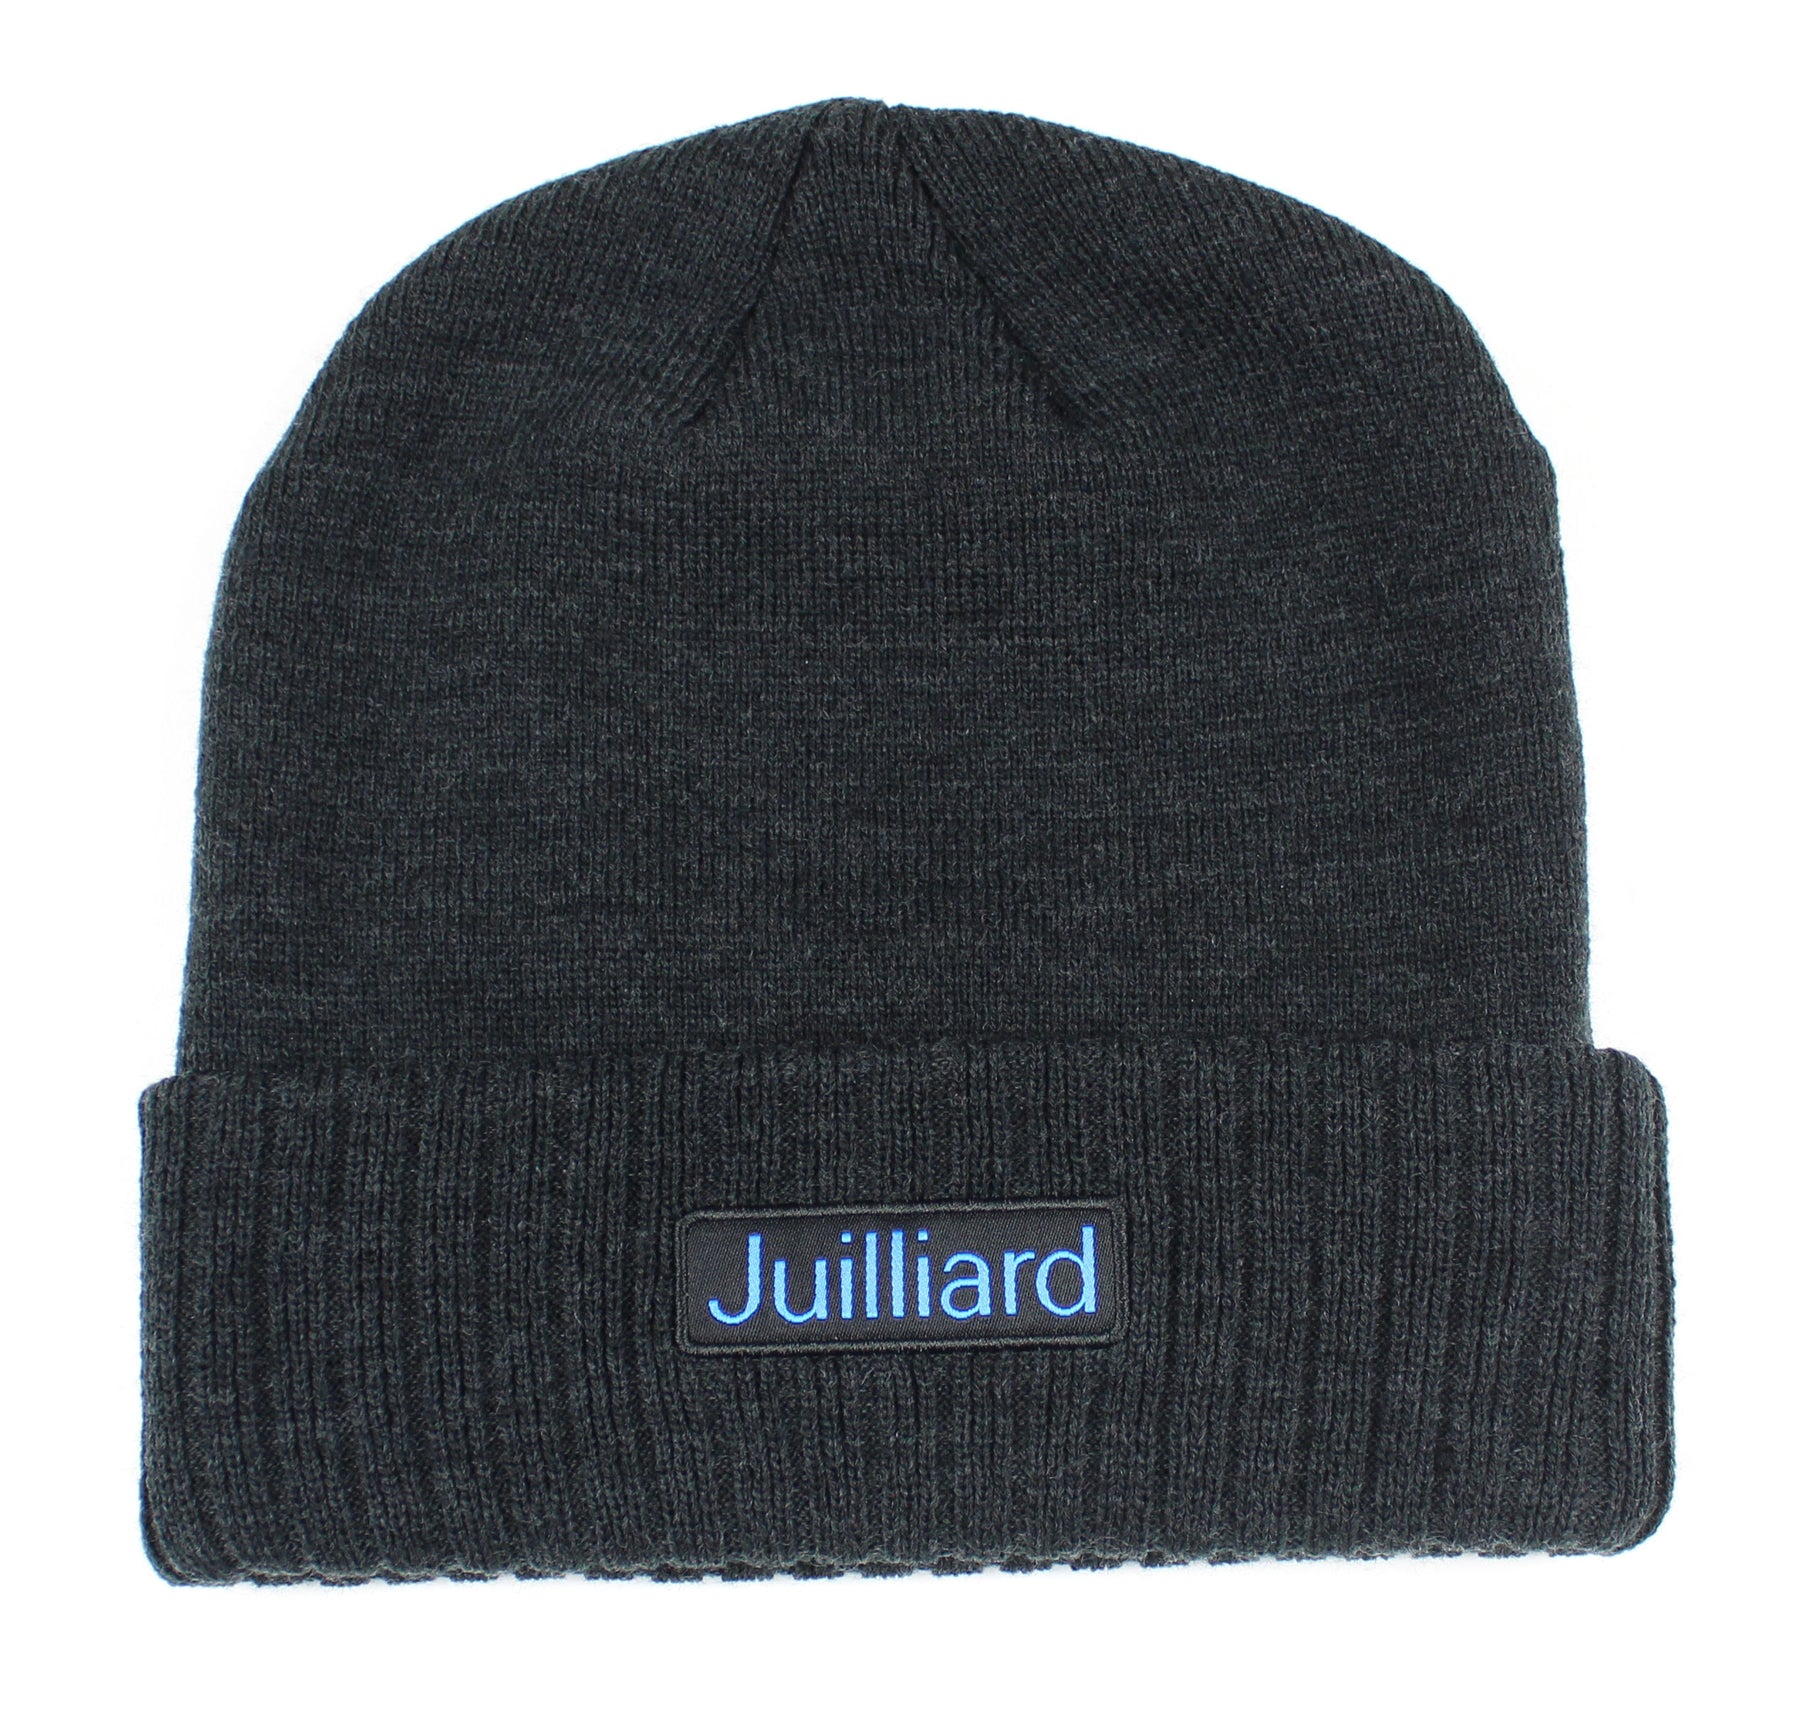 Beanie: Juilliard black winter cap FINAL SALE / CLEARANCE